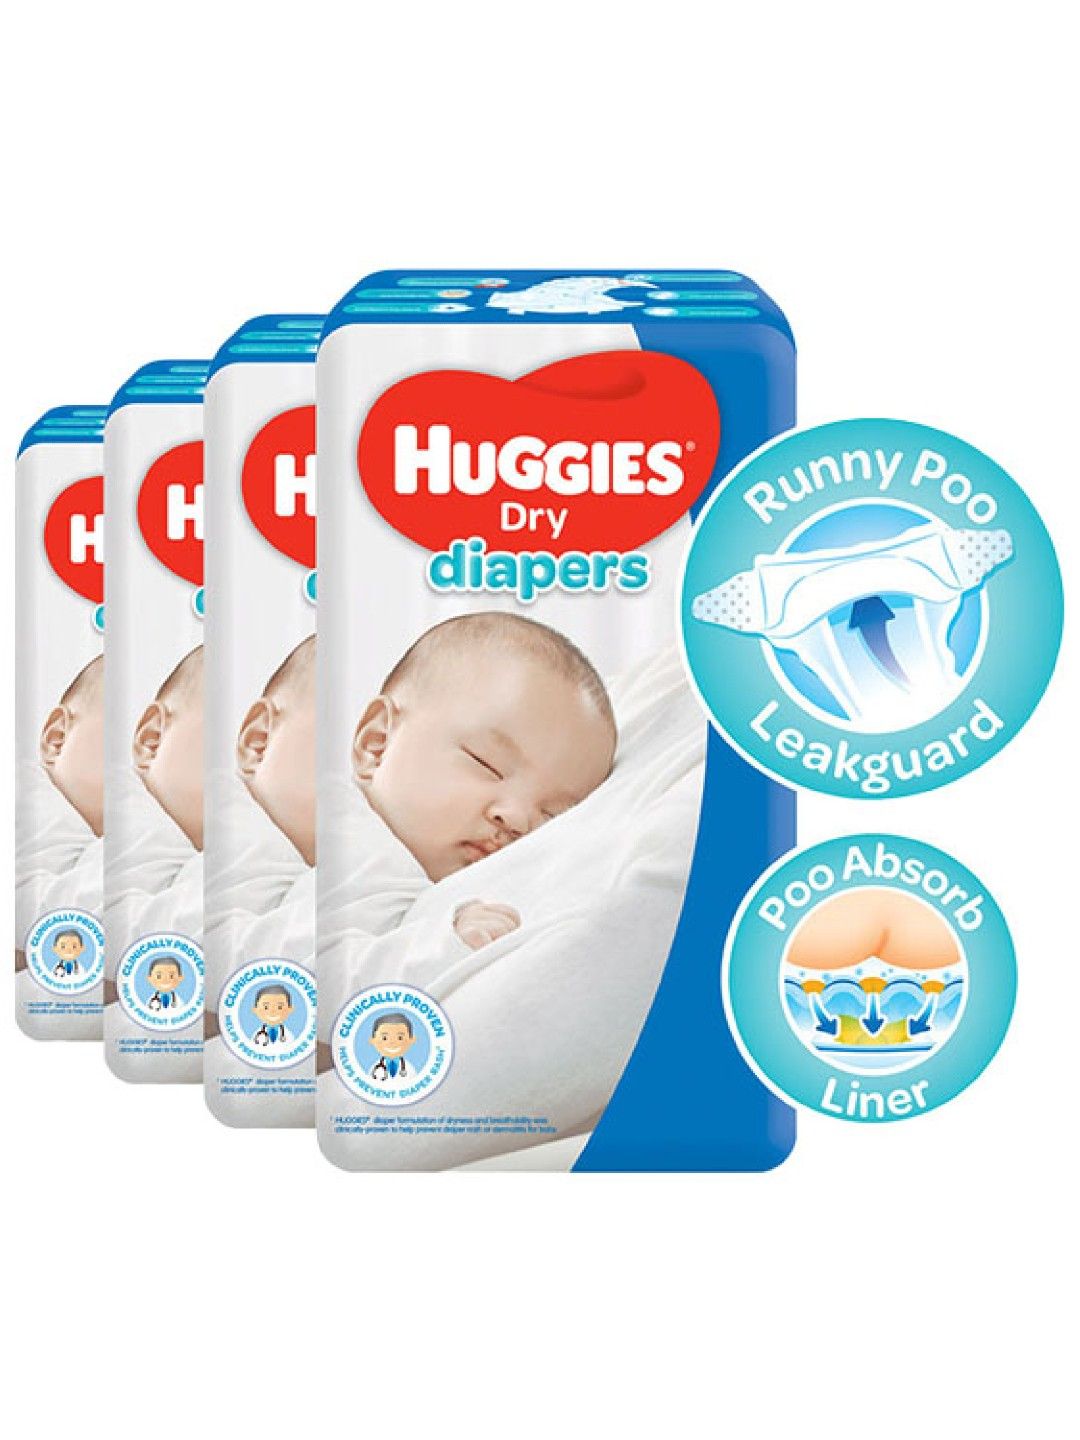 Huggies Dry Diapers Newborn (40s) Bundle of 4